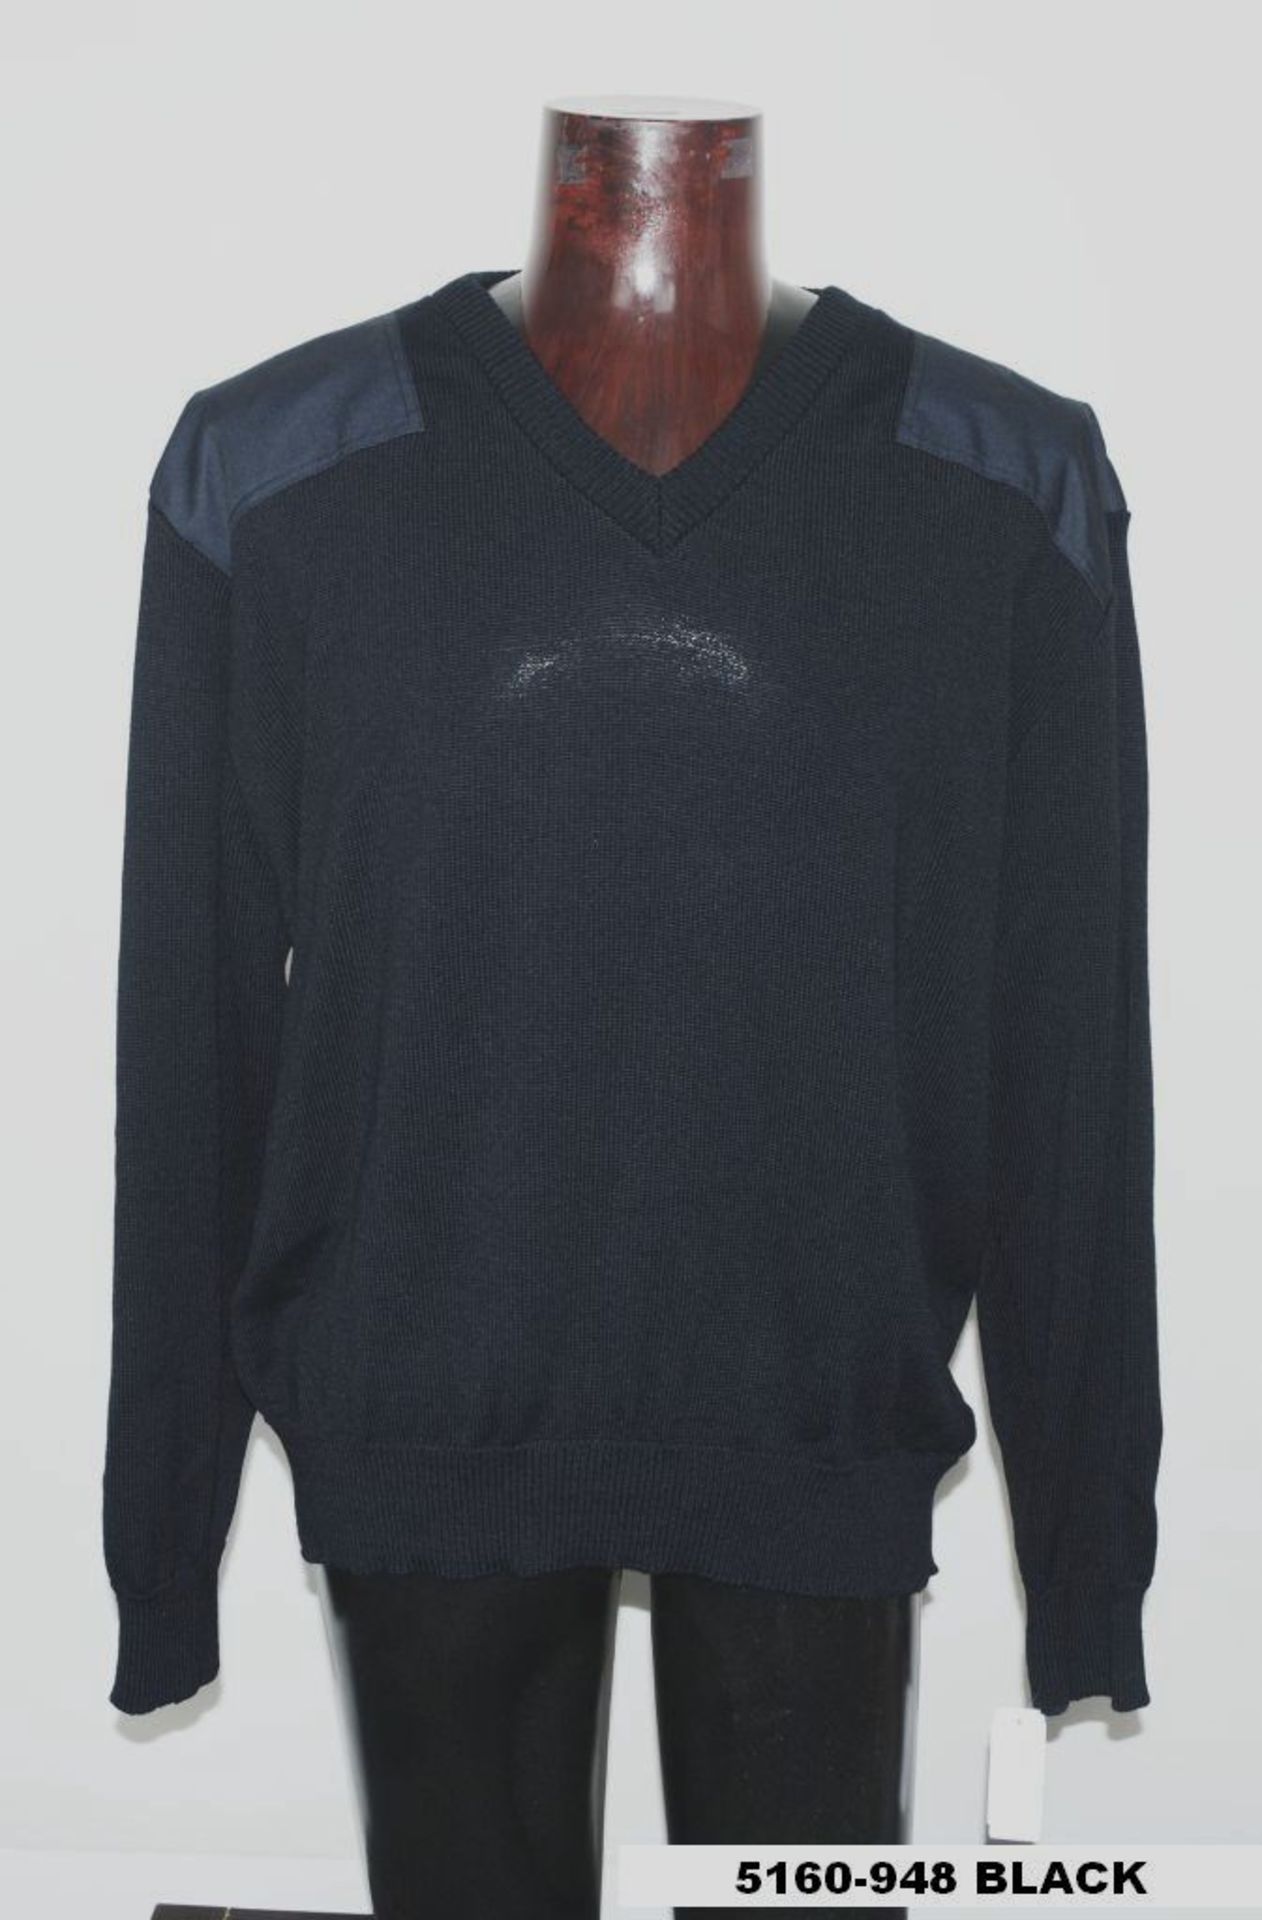 130 x Sweater, V-neck / Black / 5160-948 BA